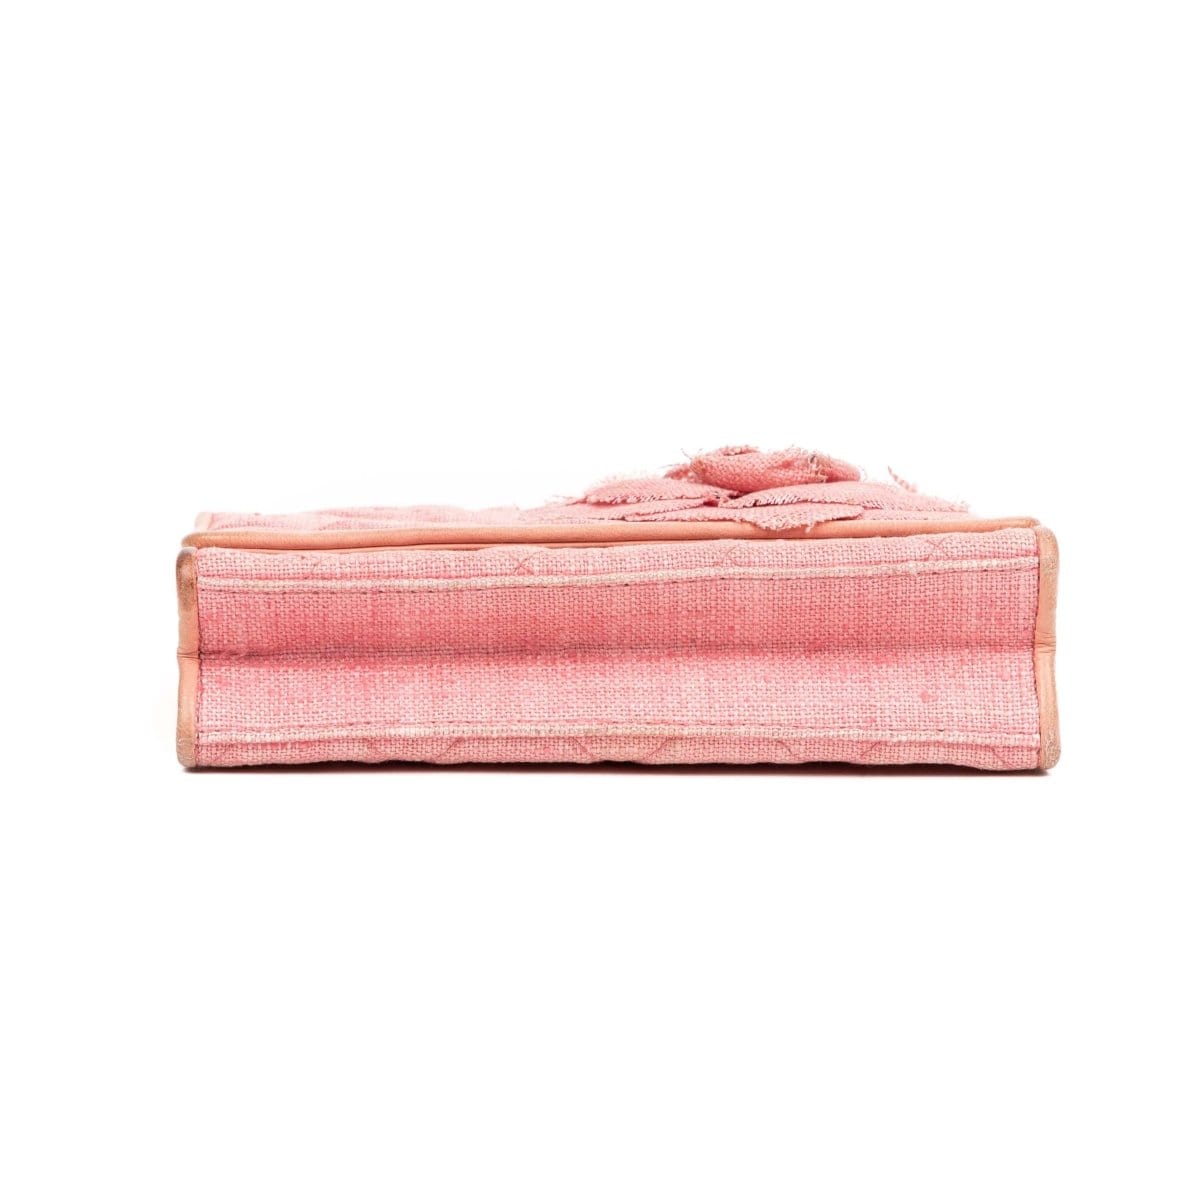 45. Lp x Christos Chanel Pink Camellia Canvas WOC - AWL2151